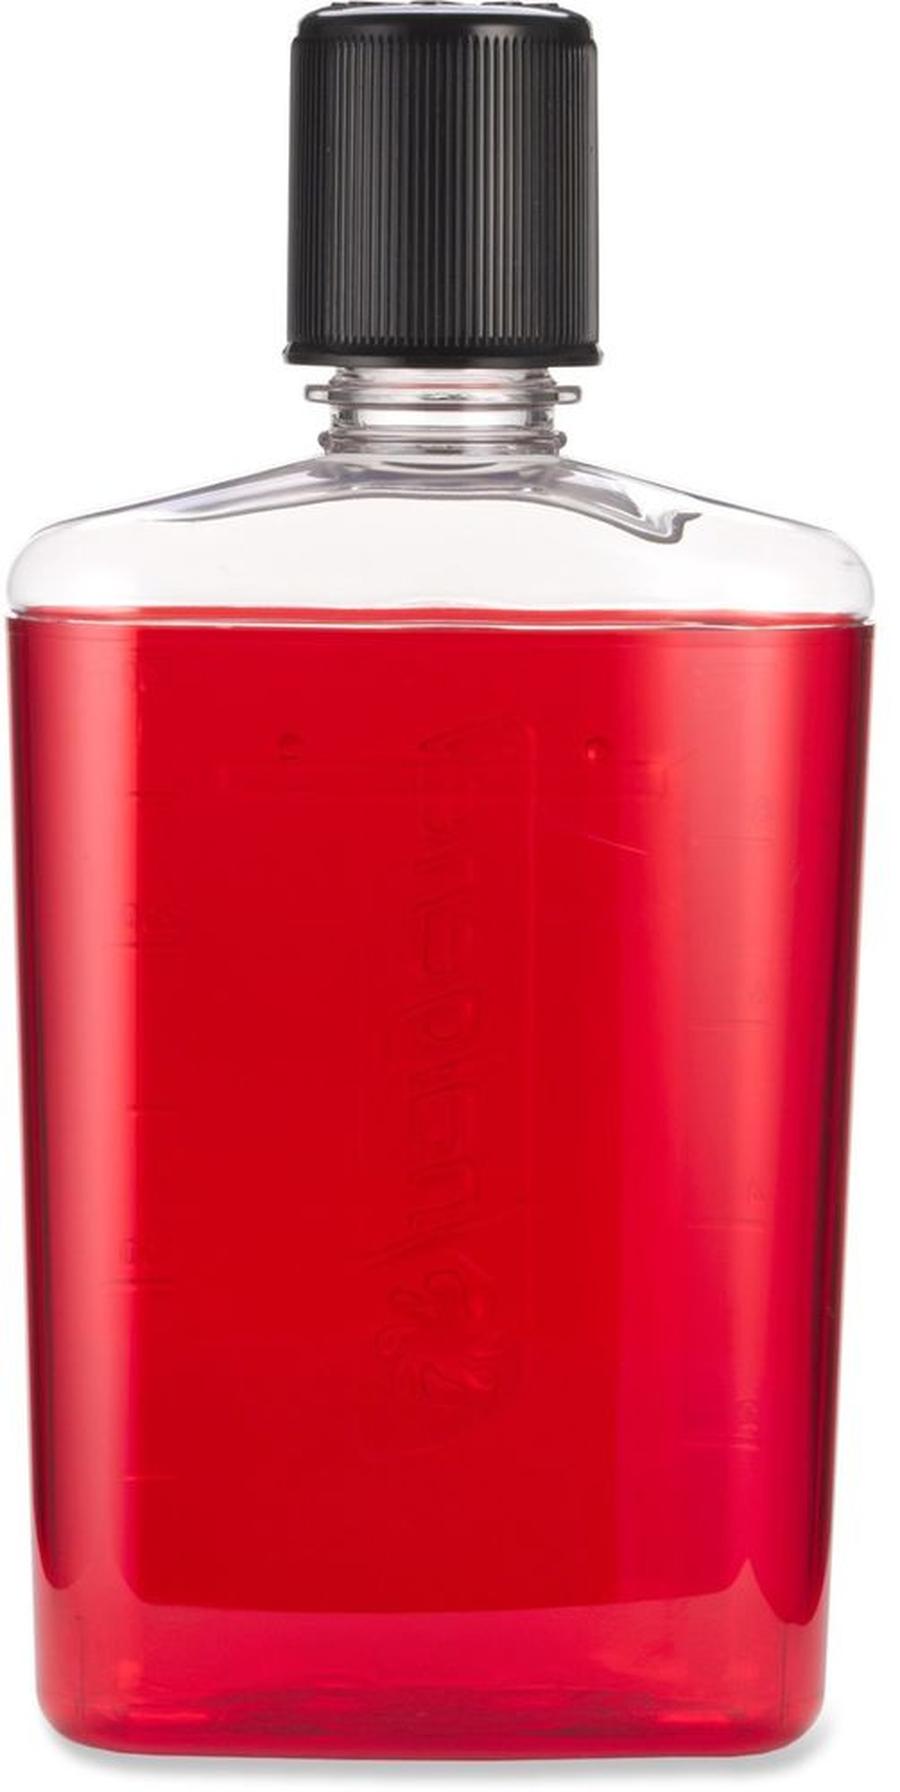 Nalgene Flask - Red with Black Cap